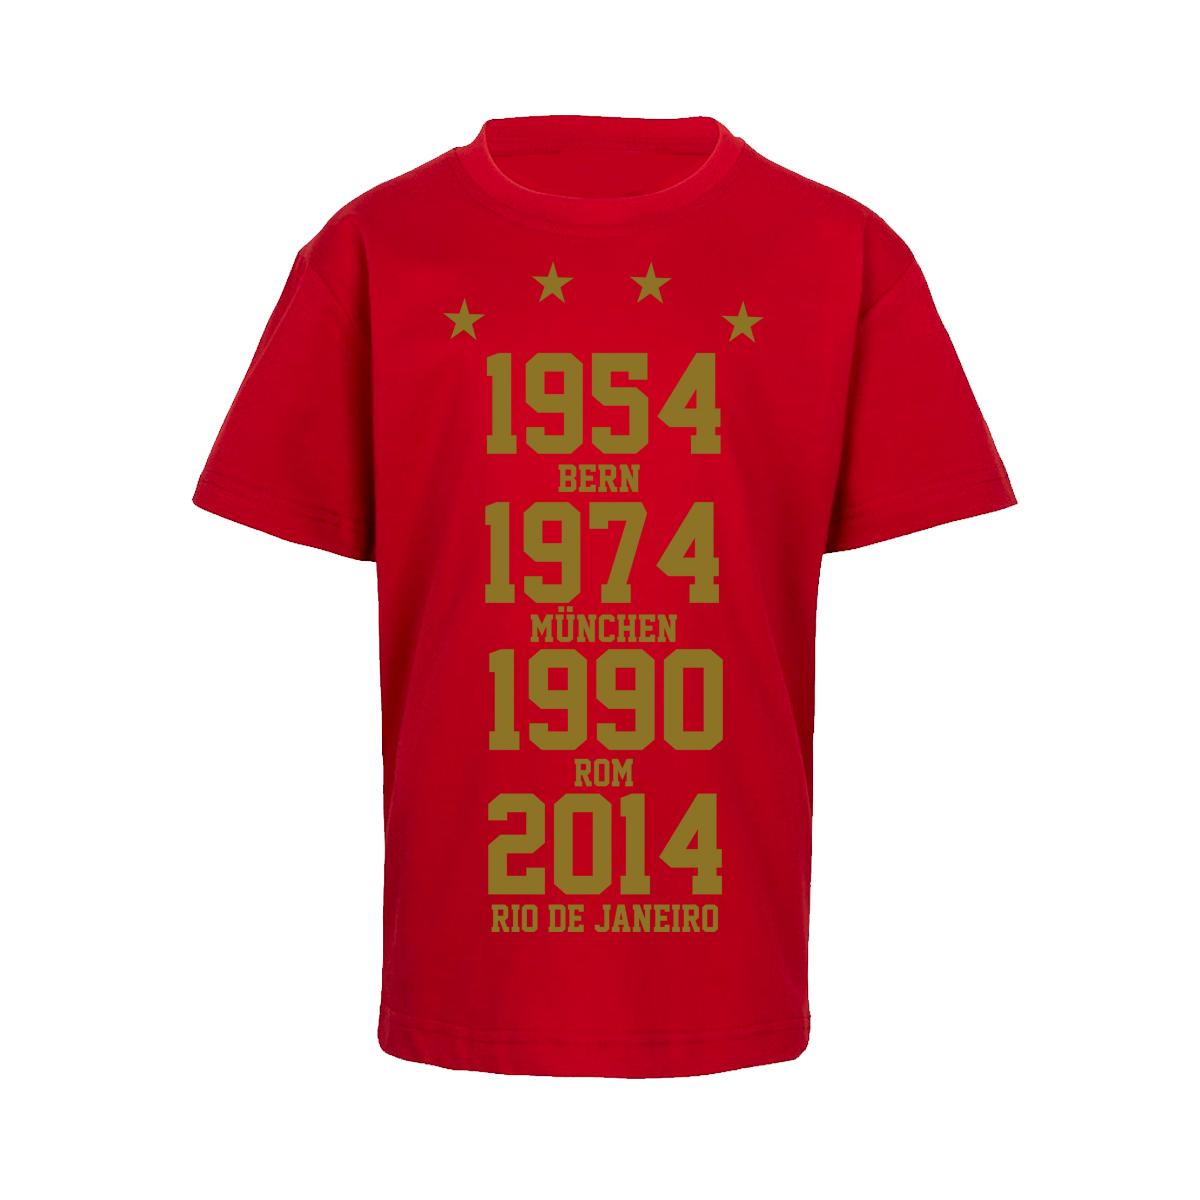 Weltmeister 54-74-90-14 Kinder T-Shirt gold-rot